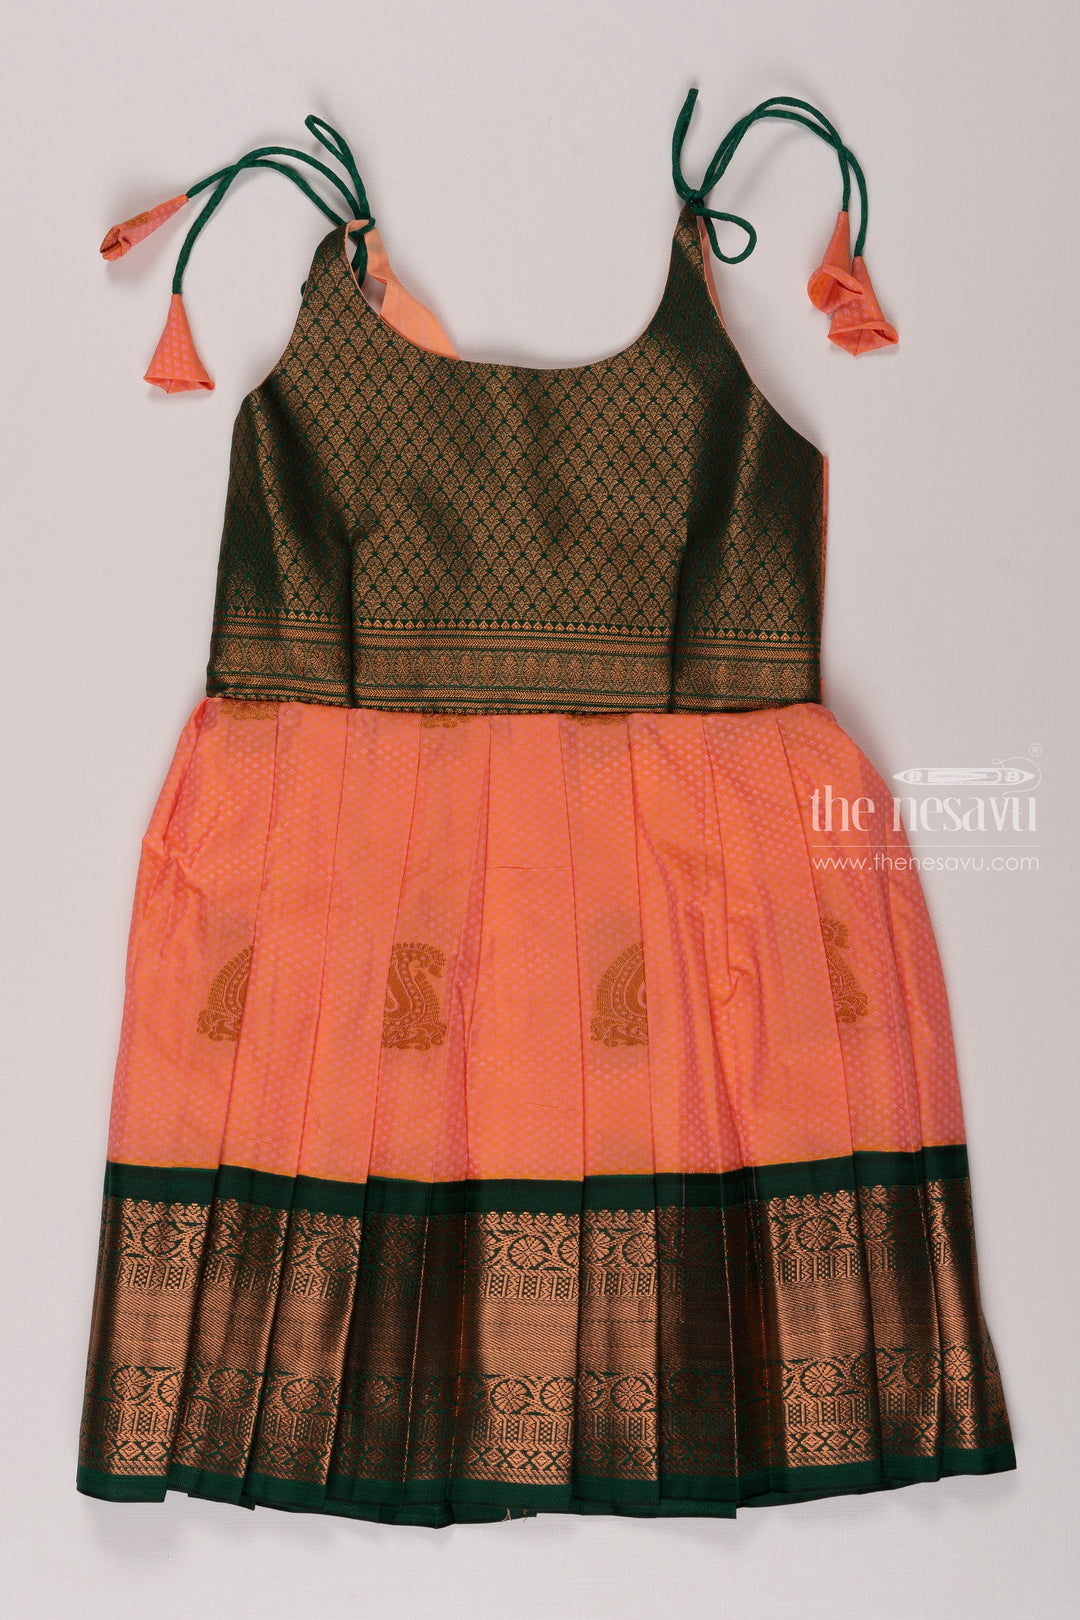 The Nesavu Tie-up Frock Girls Silk TieUp Ethnic Frock - Boutique Style Elegance Nesavu 20 (3Y) / Pink / Style 2 T343B-20 Trendy Silk Tie Up Frock for Girls | Floral Print Ethnic Dress | The Nesavu